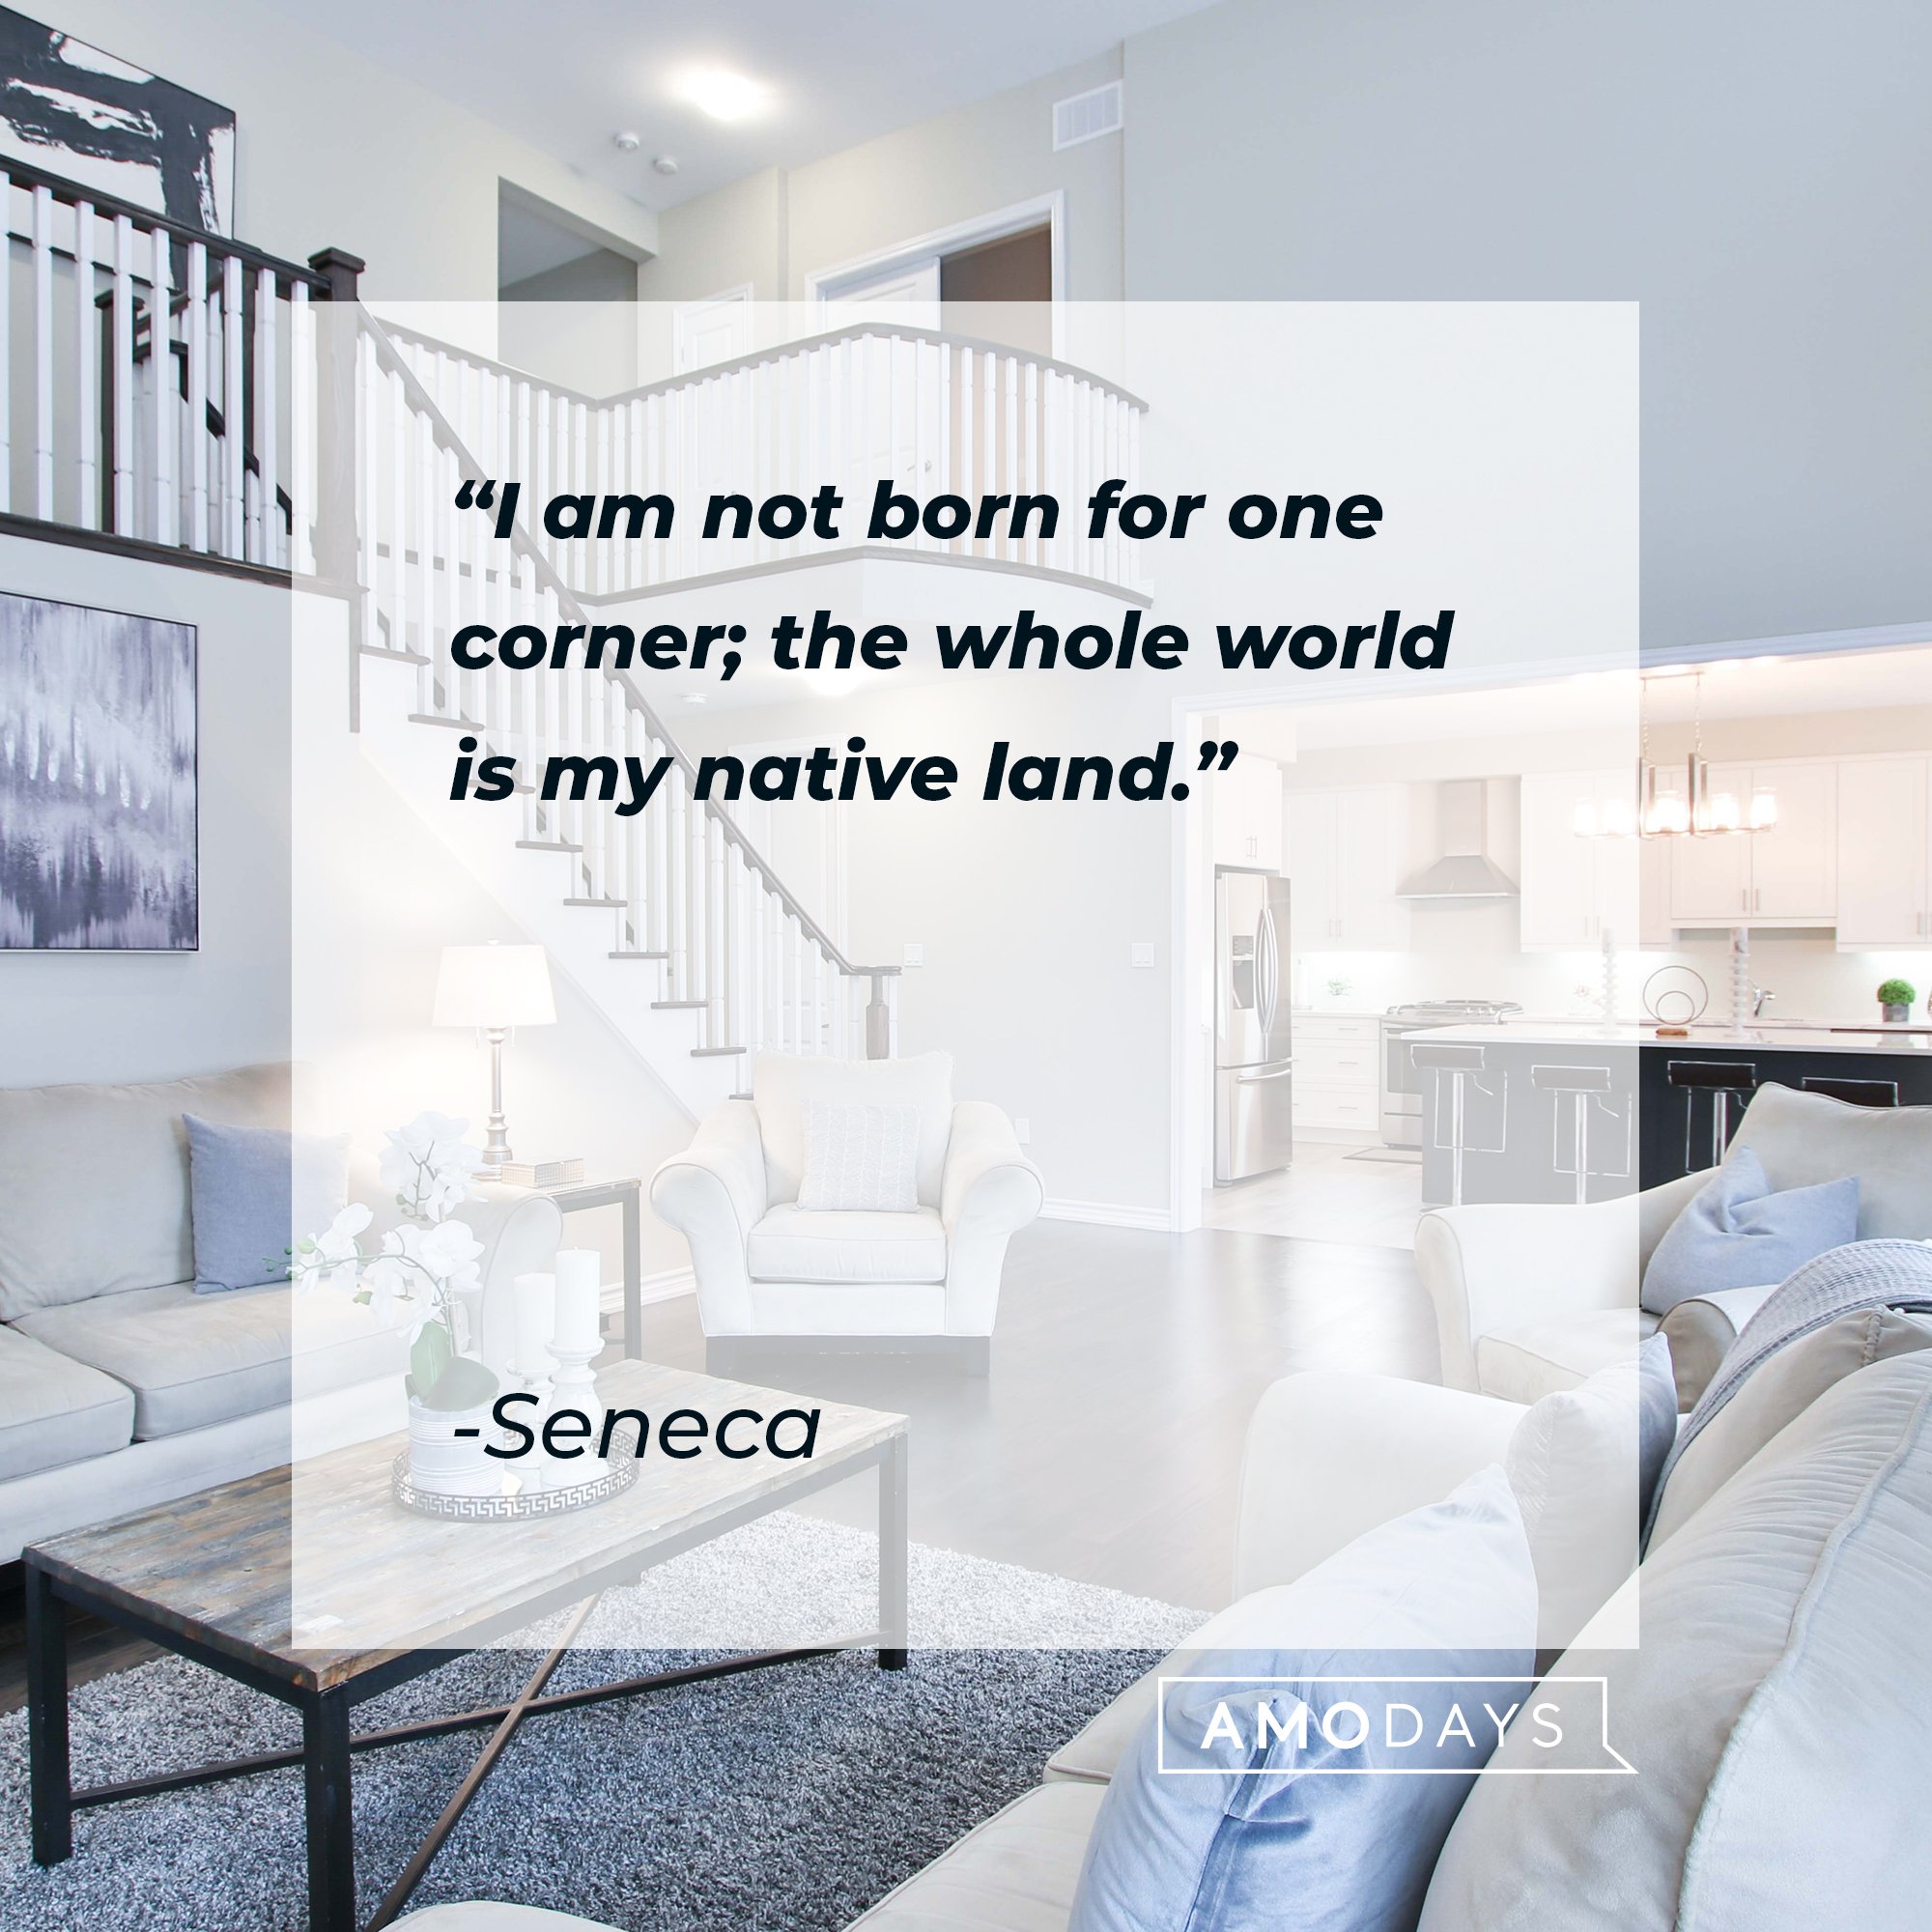 Seneca's quote: "I am not born for one corner; the whole world is my native land." | Image: AmoDays